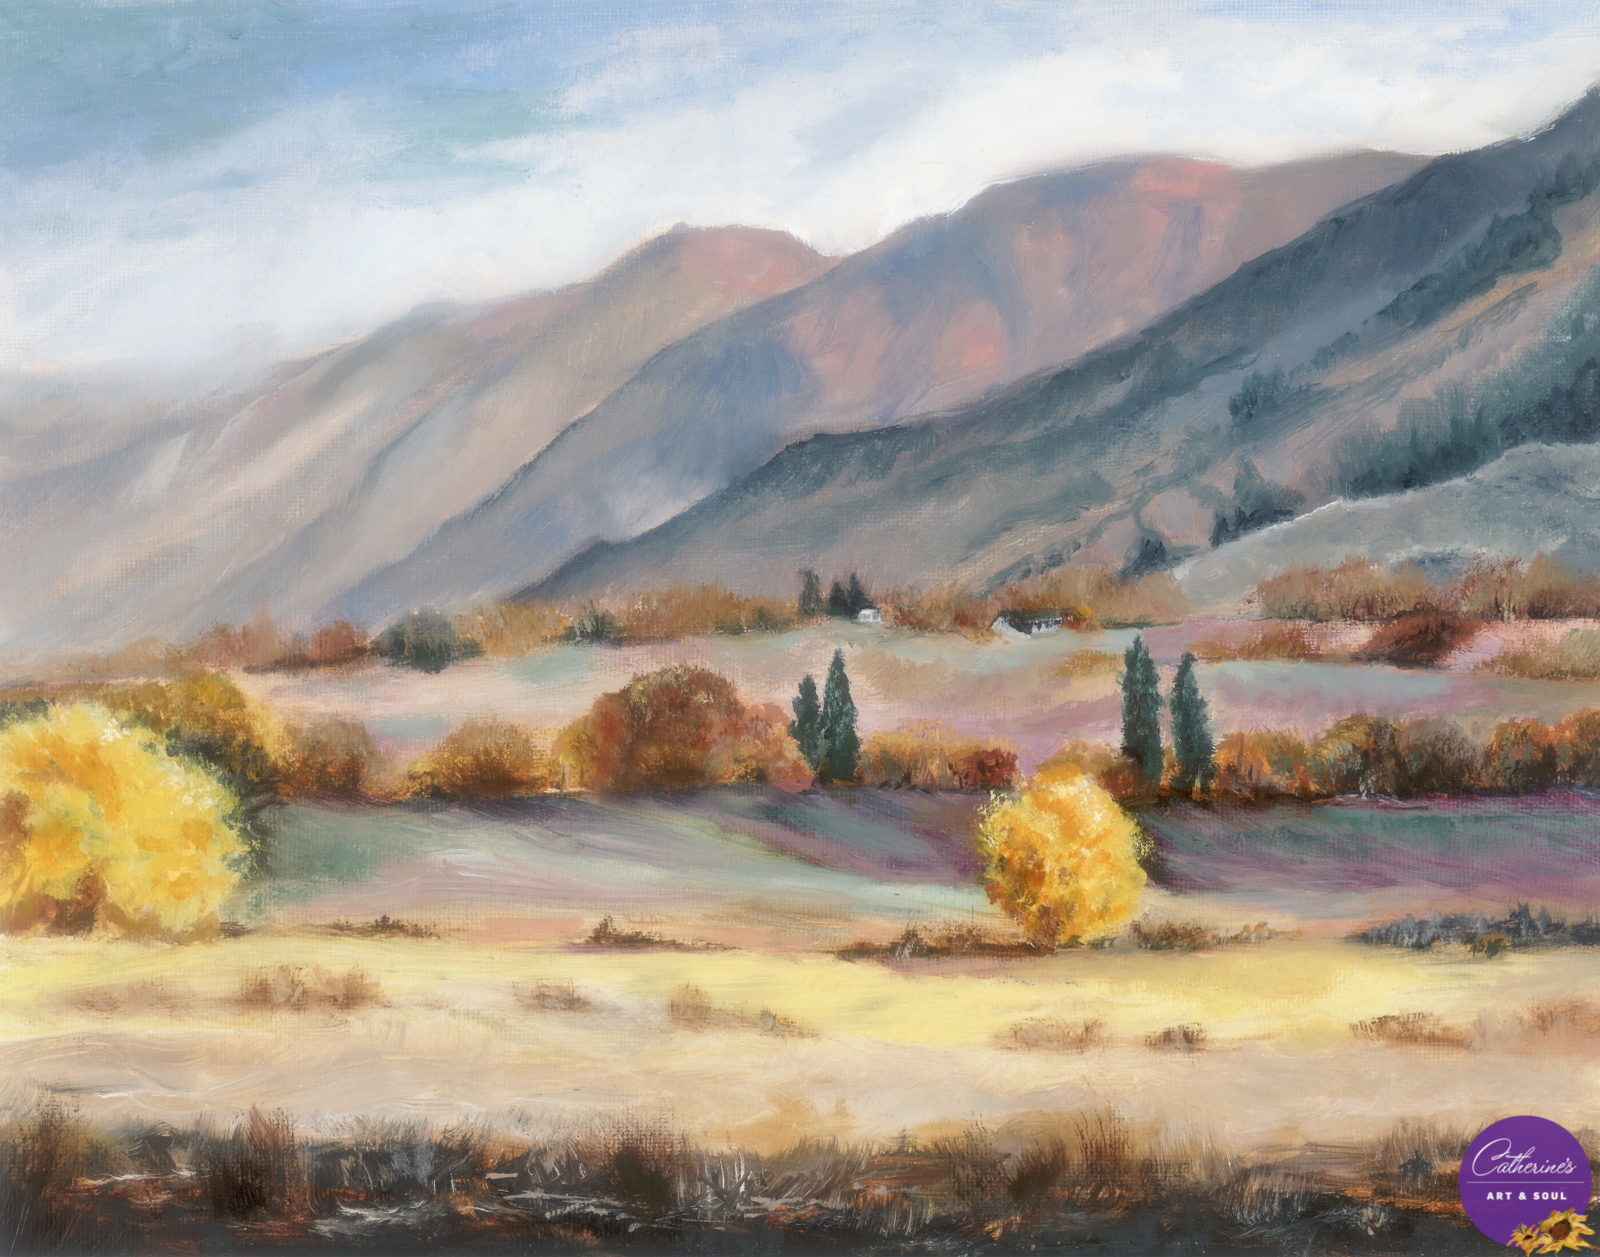 "Nevada Range" painting by artist Catherine Lemoine